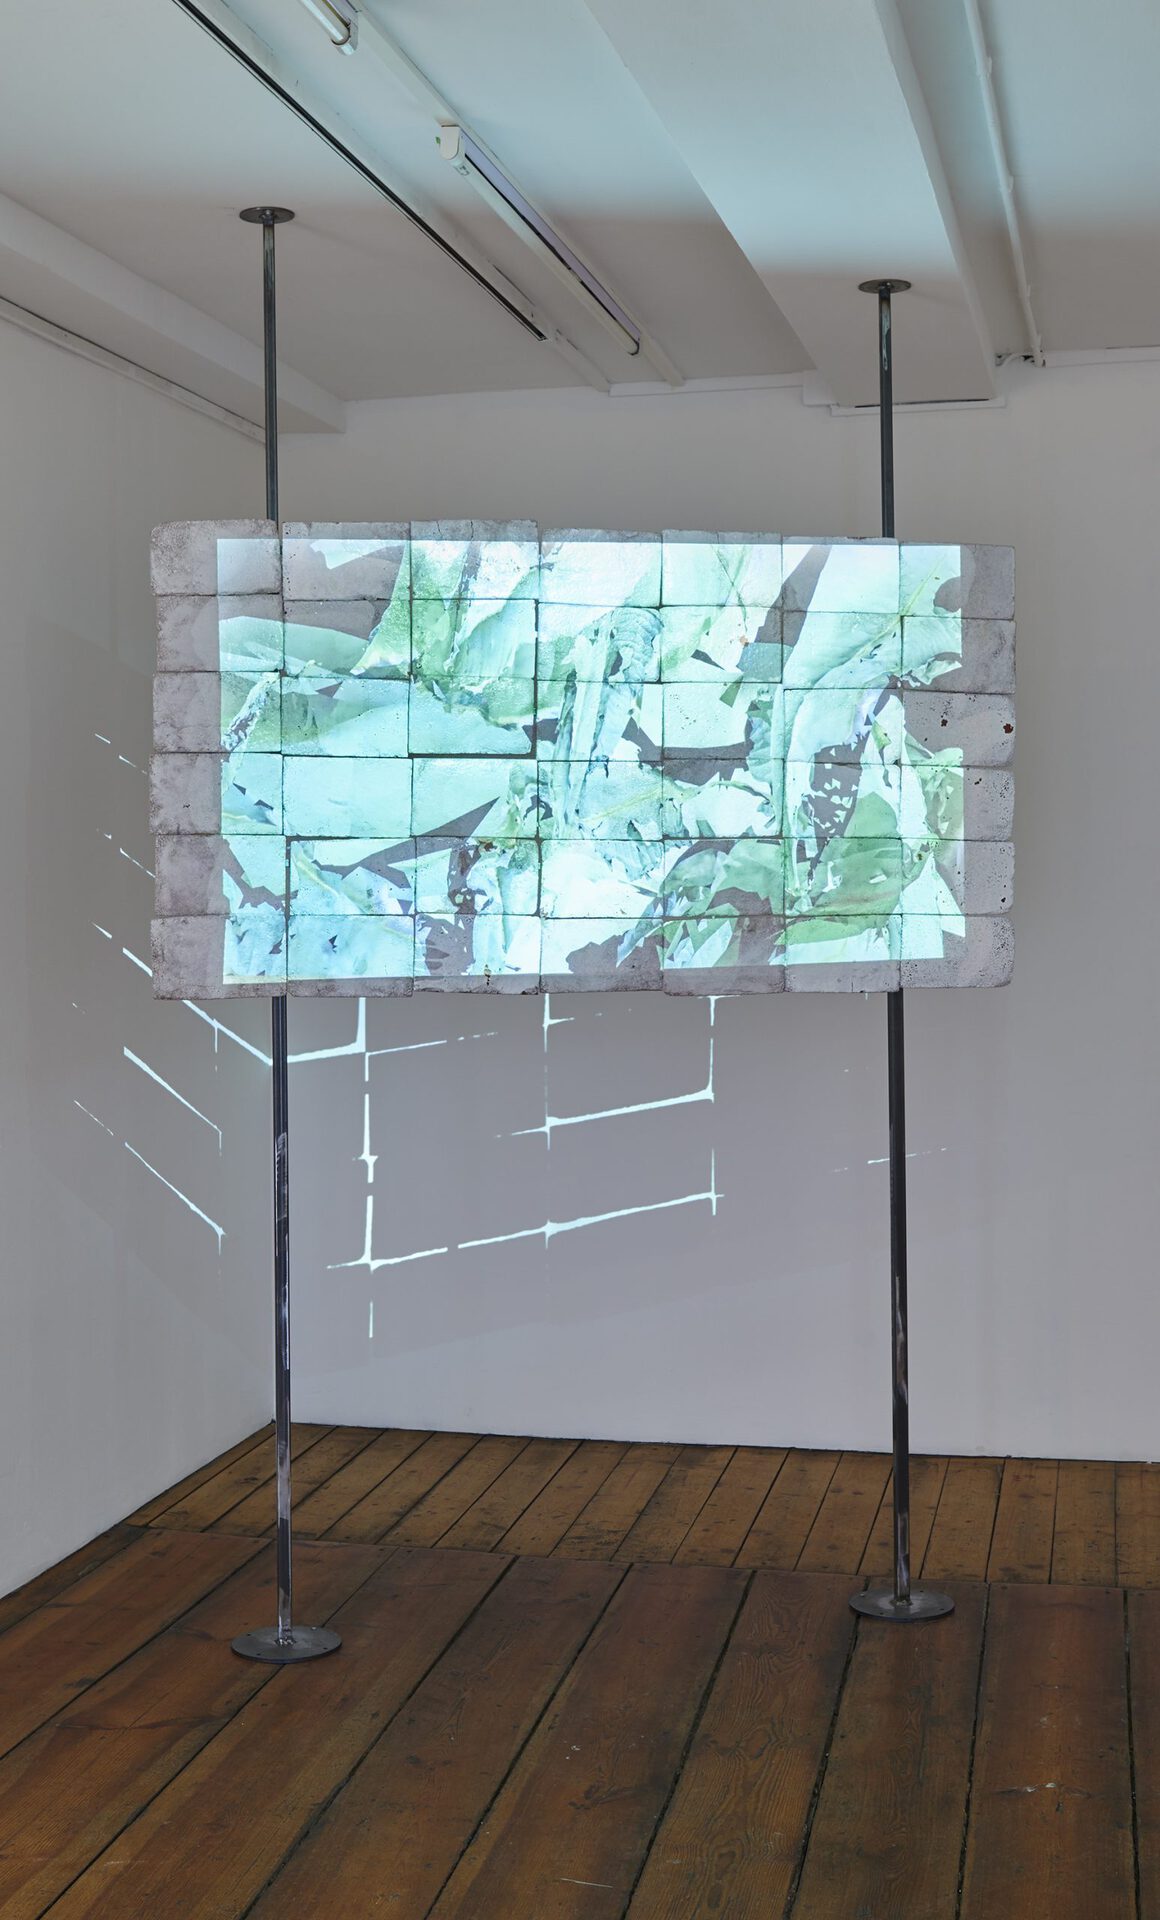 Torben Wessel, fluid leaves, 2019, variable length (this instance 13:12min), digital video projection, glazed ceramic, welded steel, 85 cm x 160 cm